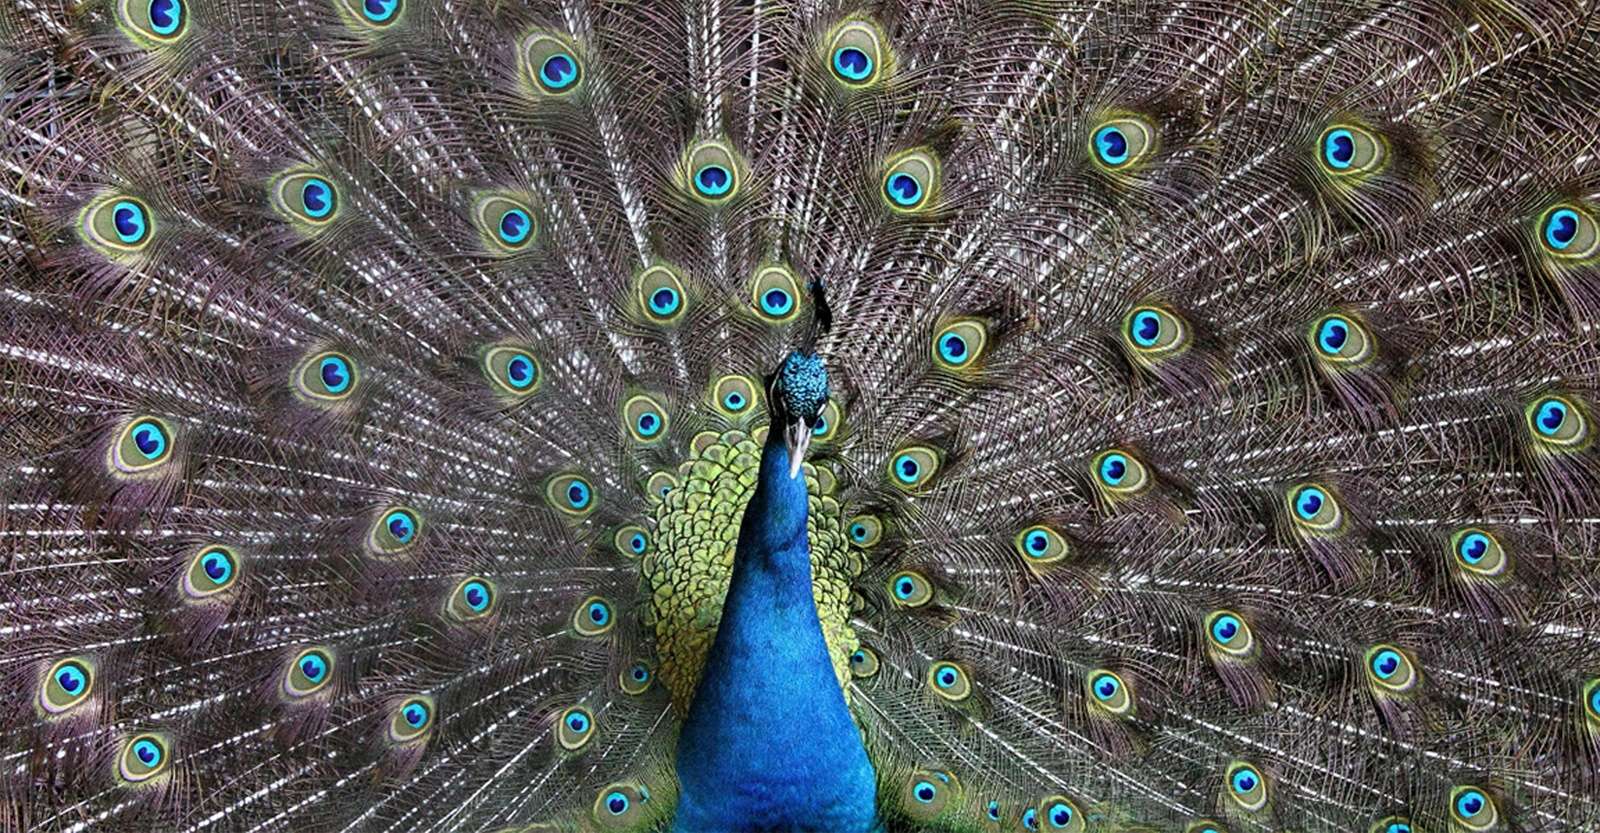 Peacock, Ranthambore National Park, India.